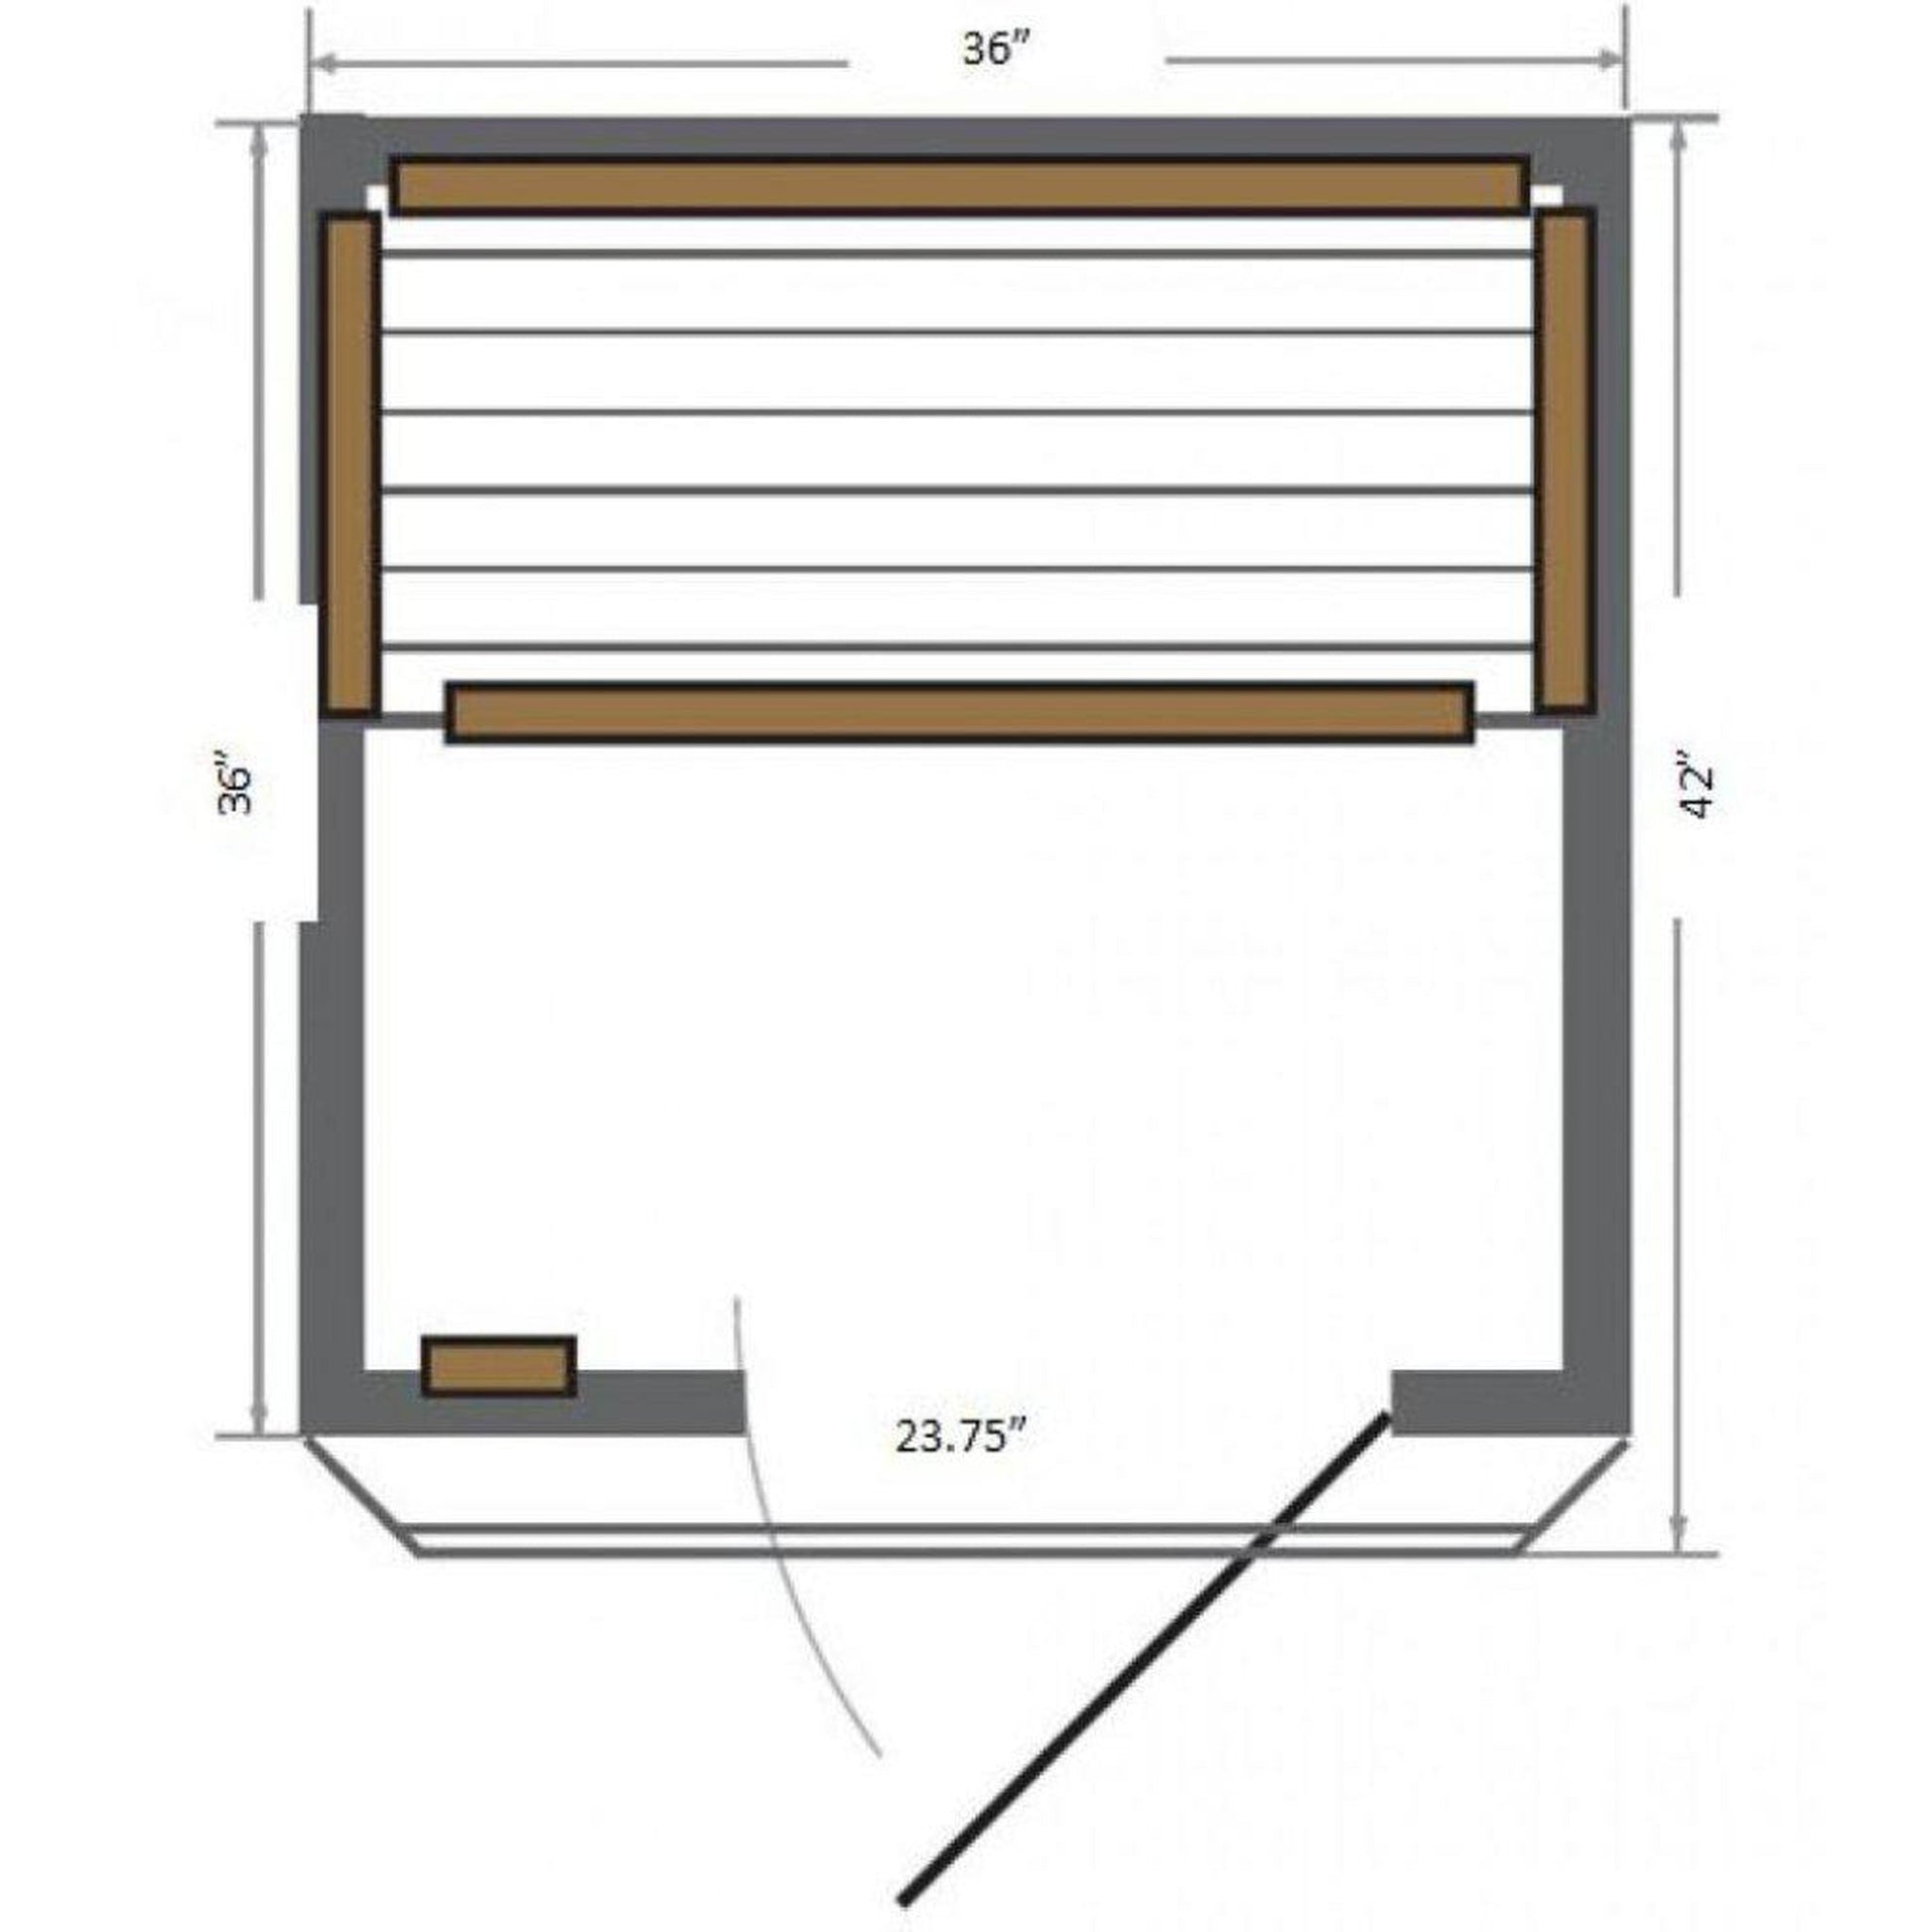 SunRay Barrett 2-Person Hemlock Wood Indoor Infrared Sauna With 5 Advanced Carbon Nano Heaters